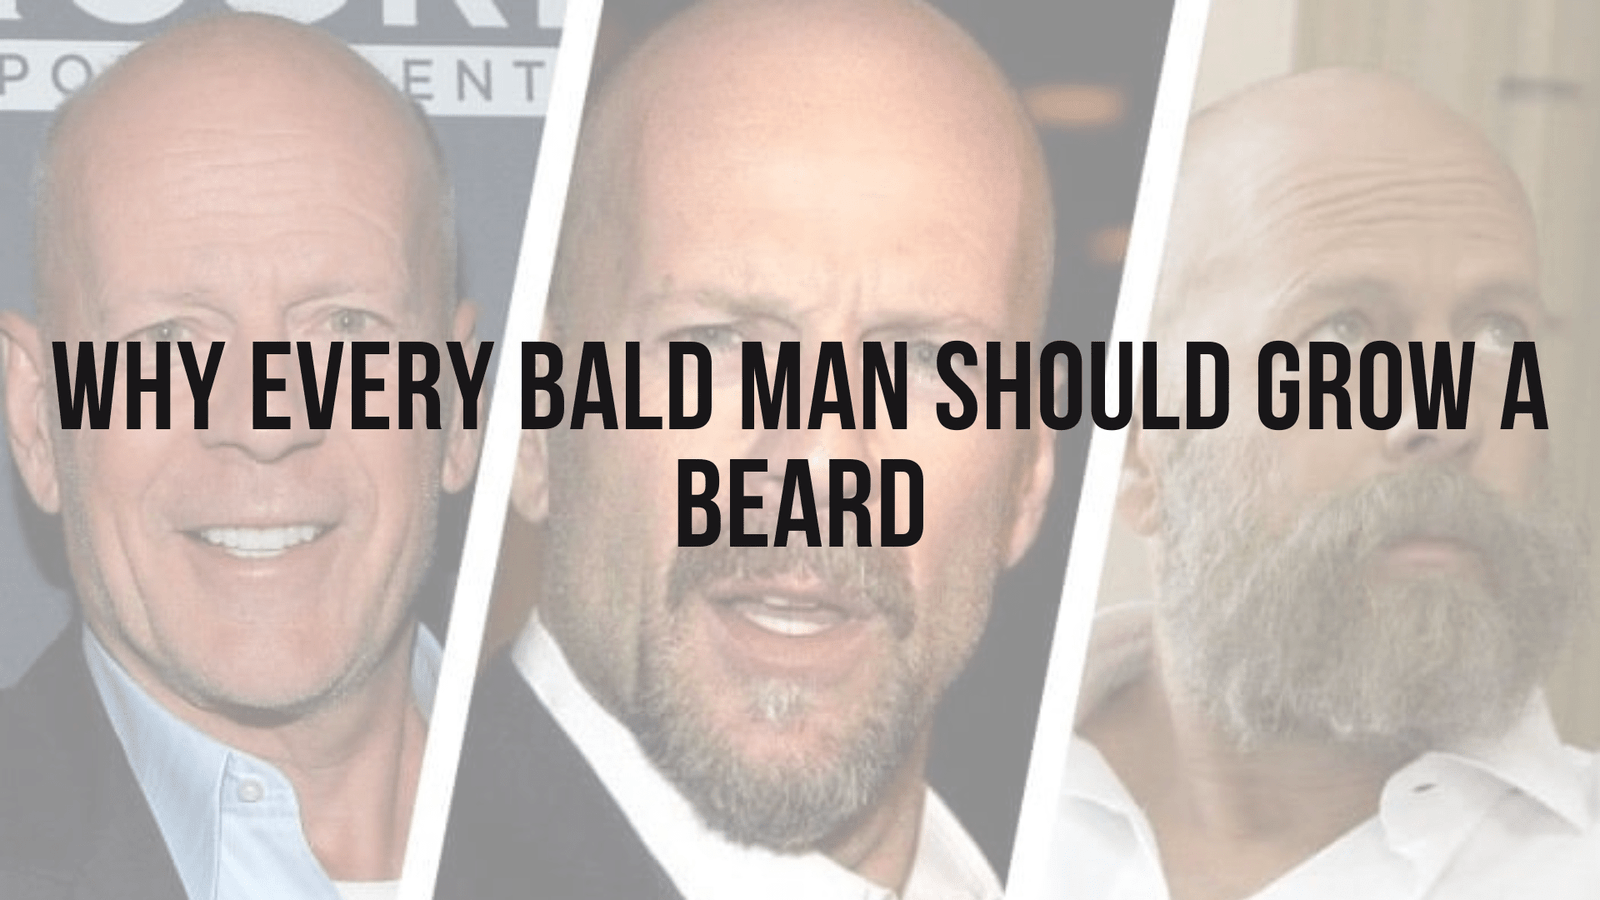 Why Do Bald Men Need To Grow A Beard Bald Lifestyle 